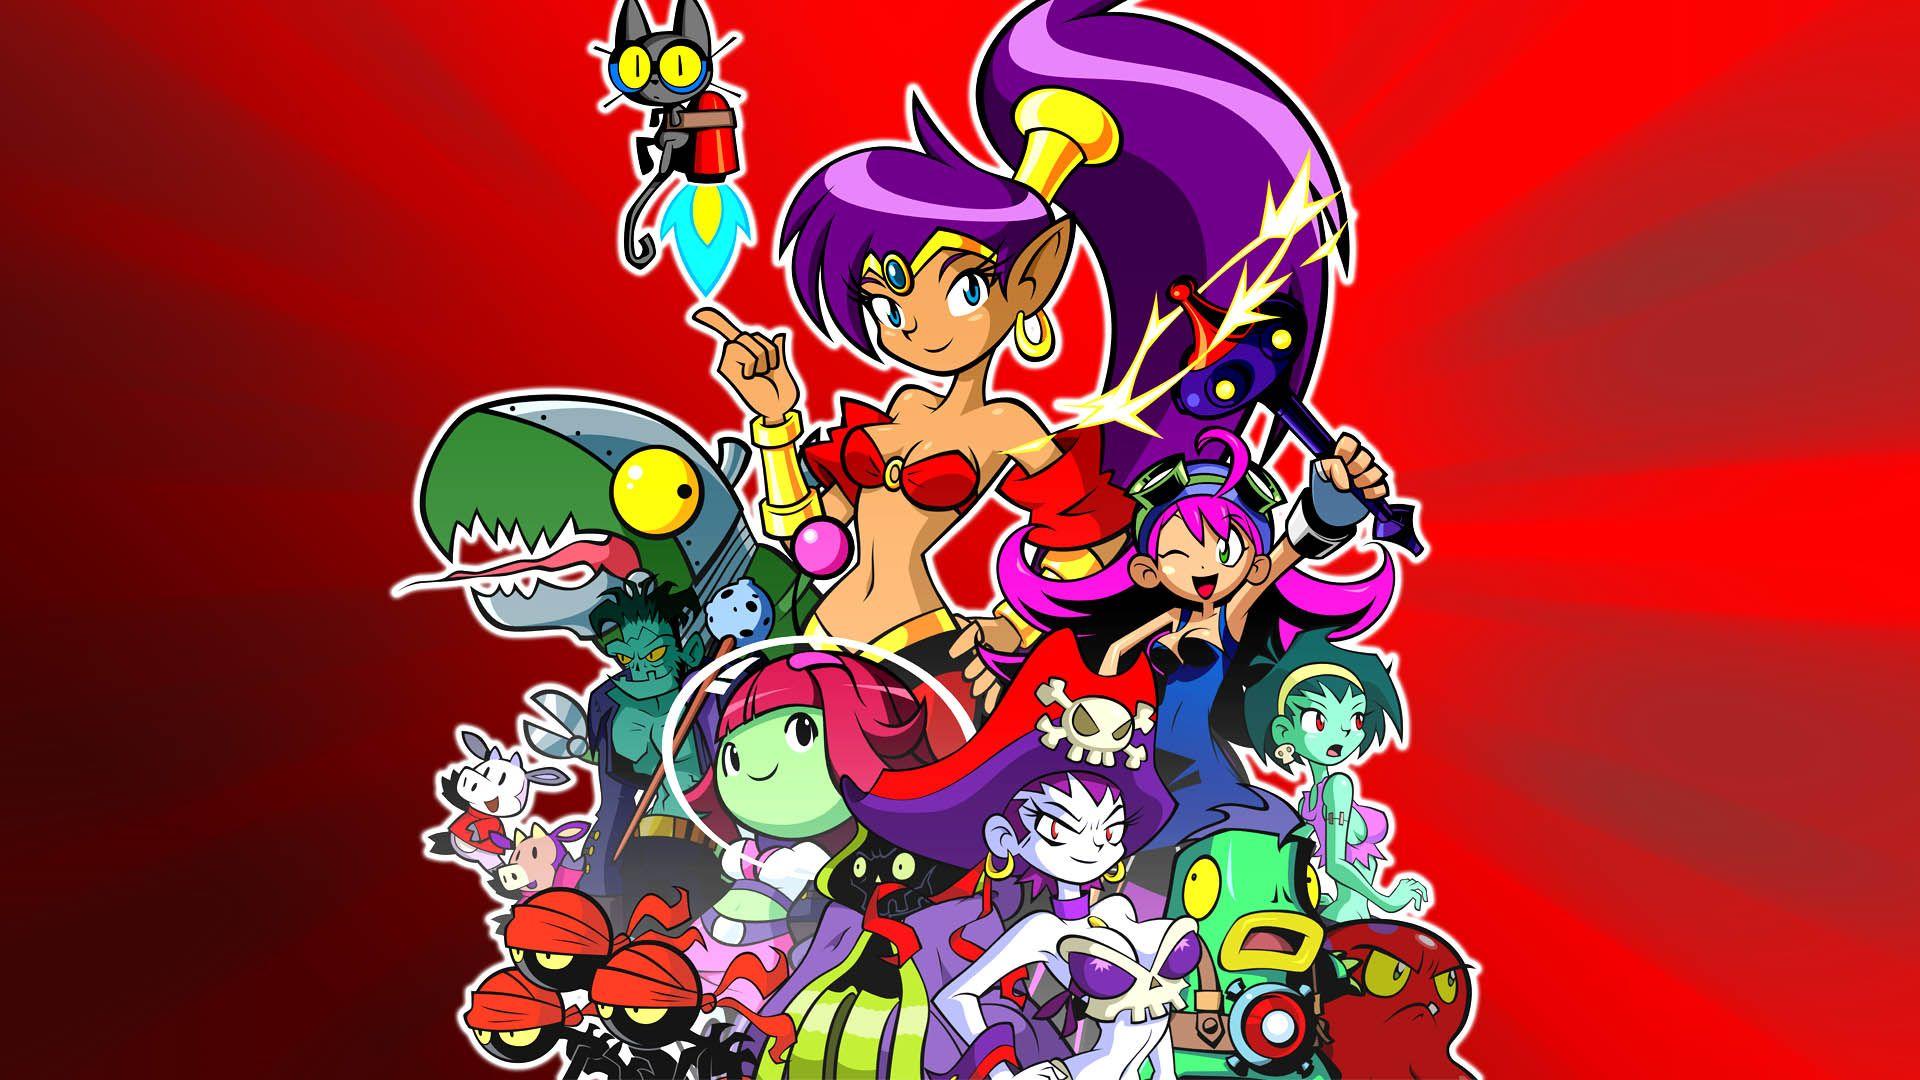 Shantae and friends. Wallpaper from Shantae: Risky's Revenge